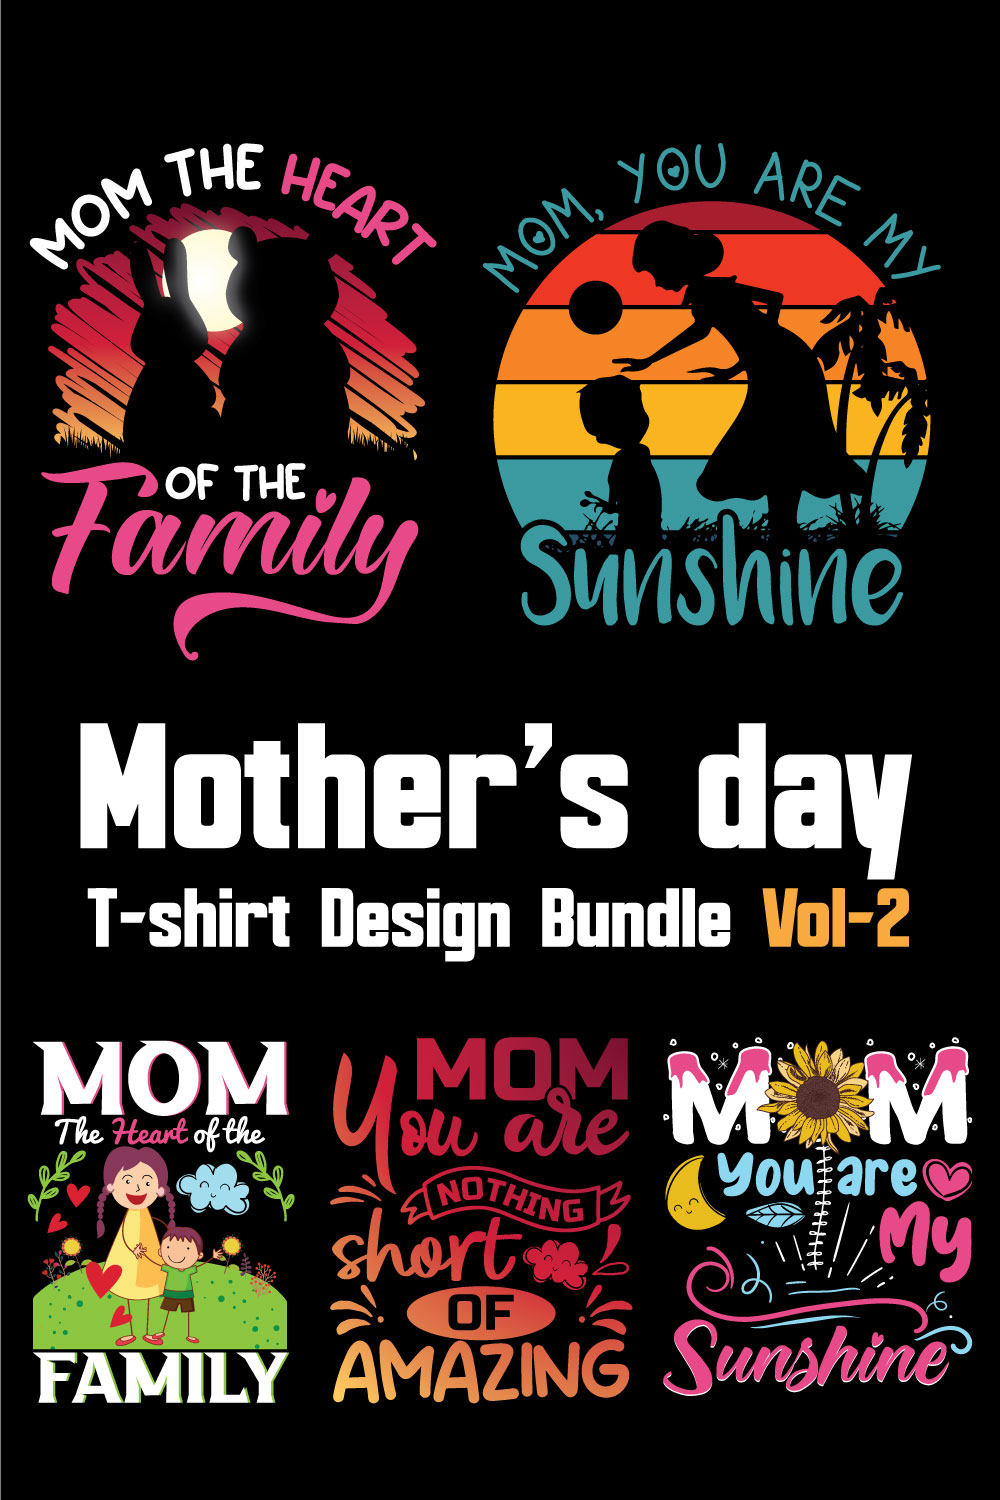 Mother's Day T-shirt Design Bundle Vol-2 pinterest preview image.